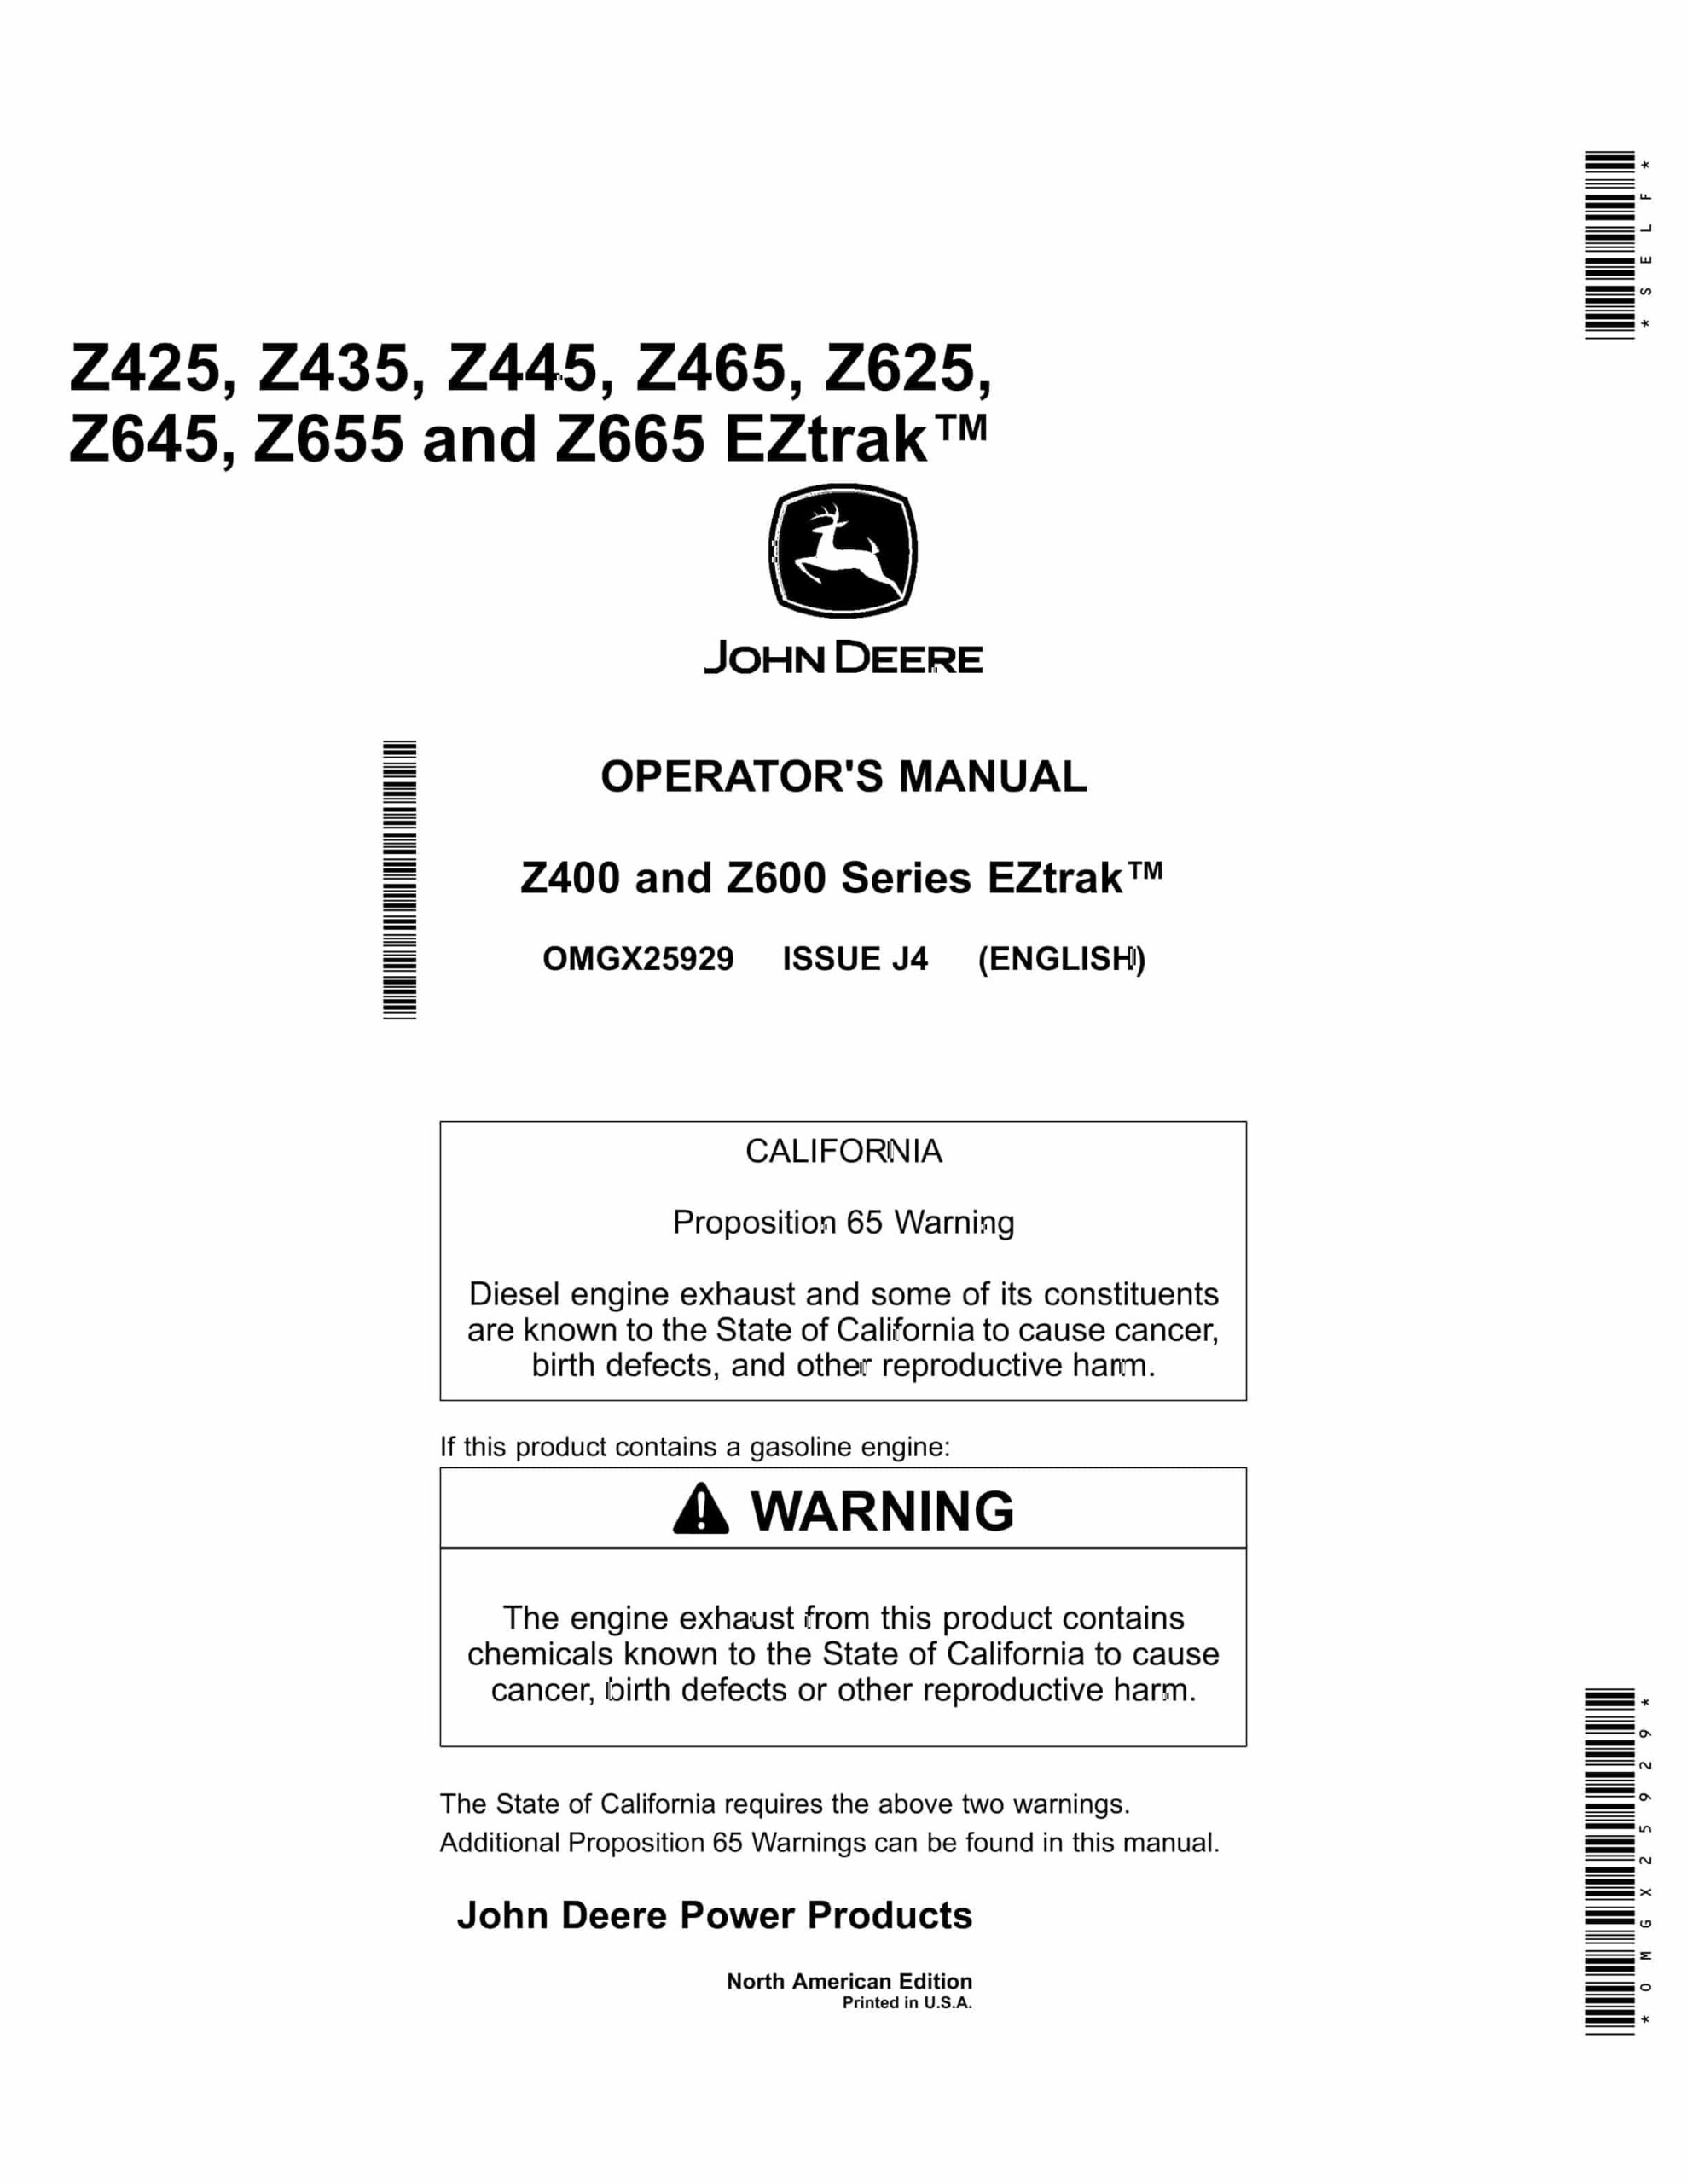 John Deere Z425, Z435, Z445, Z465, Z625, Z645, Z655 and Z665 EZtrak Operator Manual OMGX25929-1